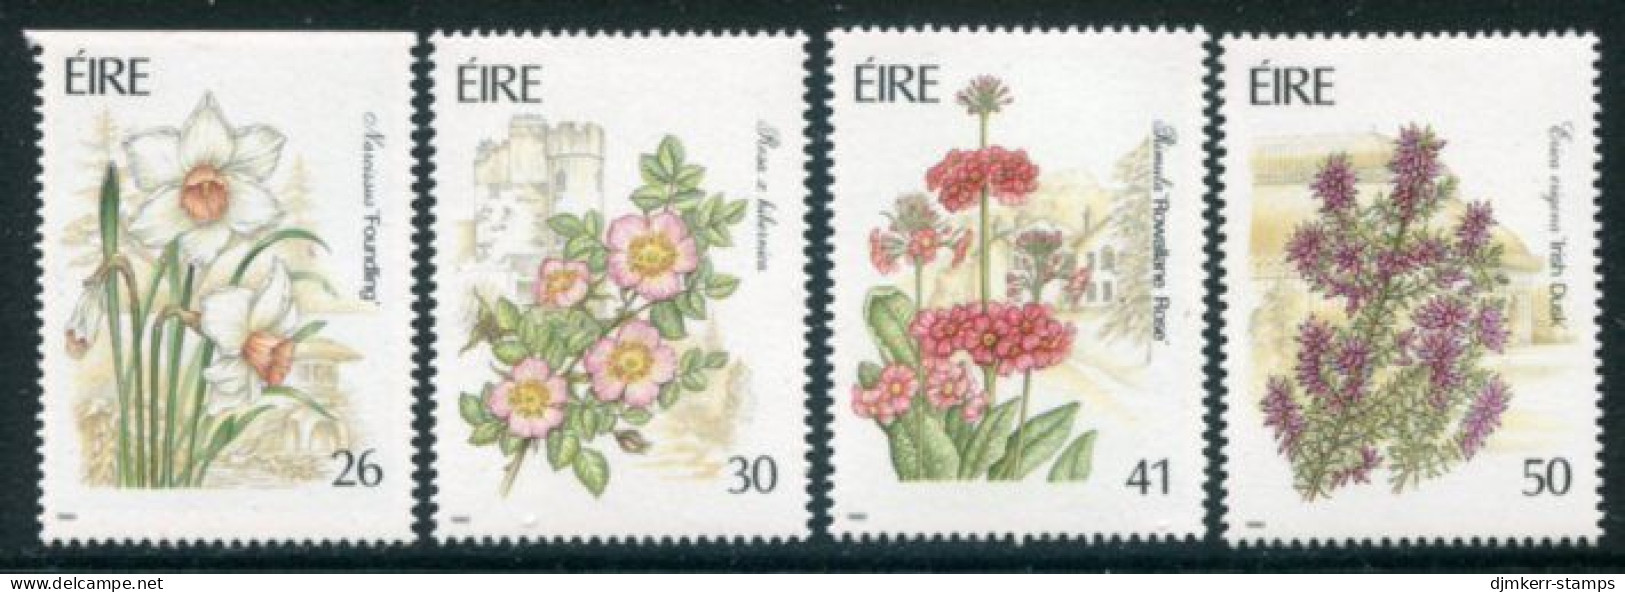 IRELAND1990 Irish Garden Flowers MNH / **.  Michel 729-732 - Nuovi